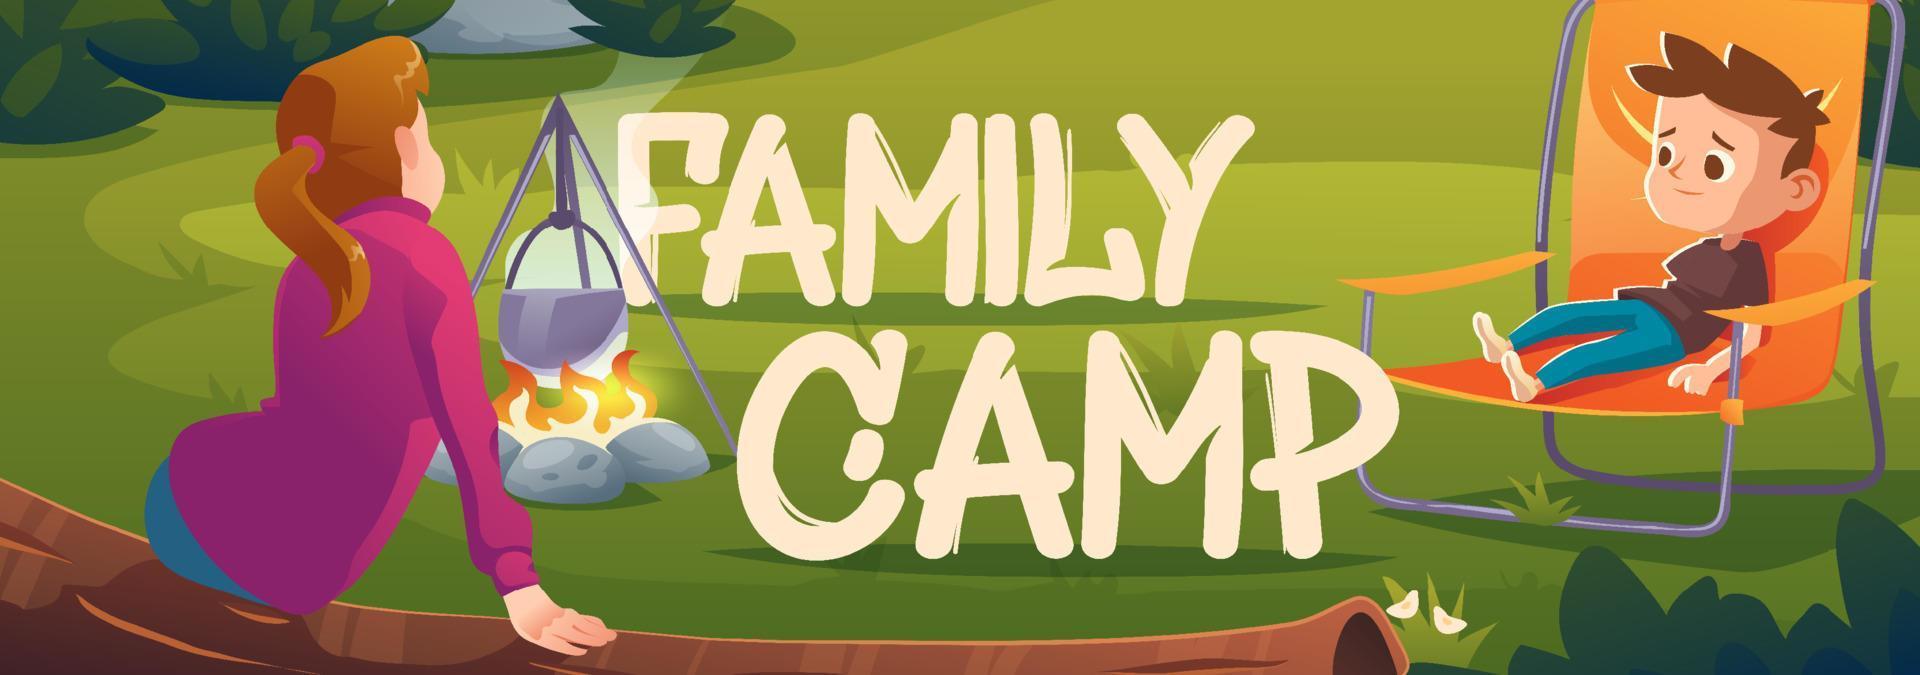 Family camp cartoon banner, children in forest vector